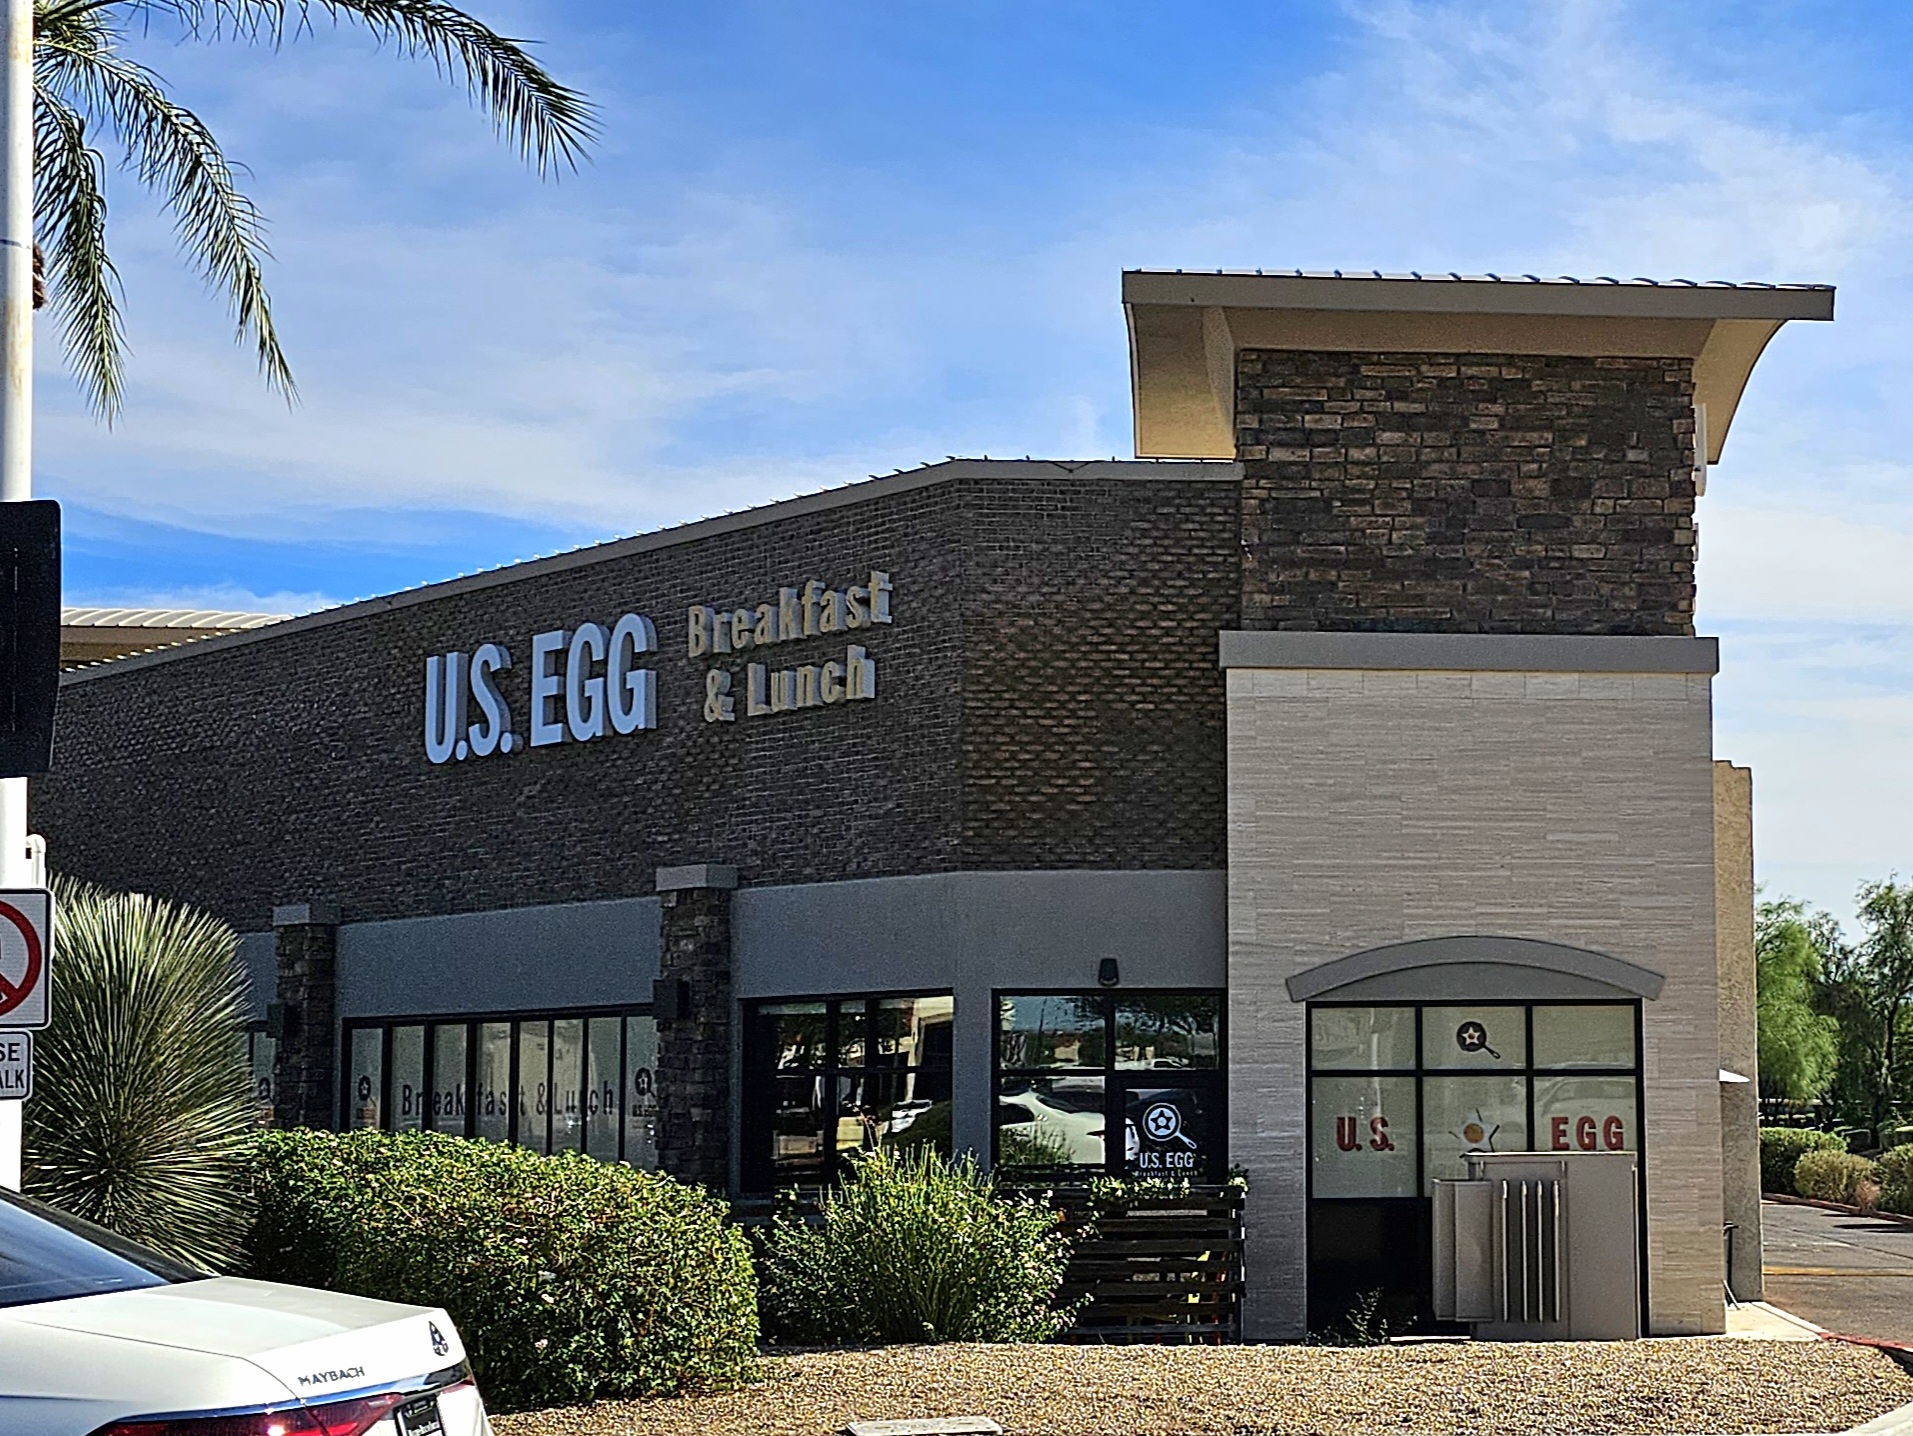 U.S. Egg a Brunch Restaurant